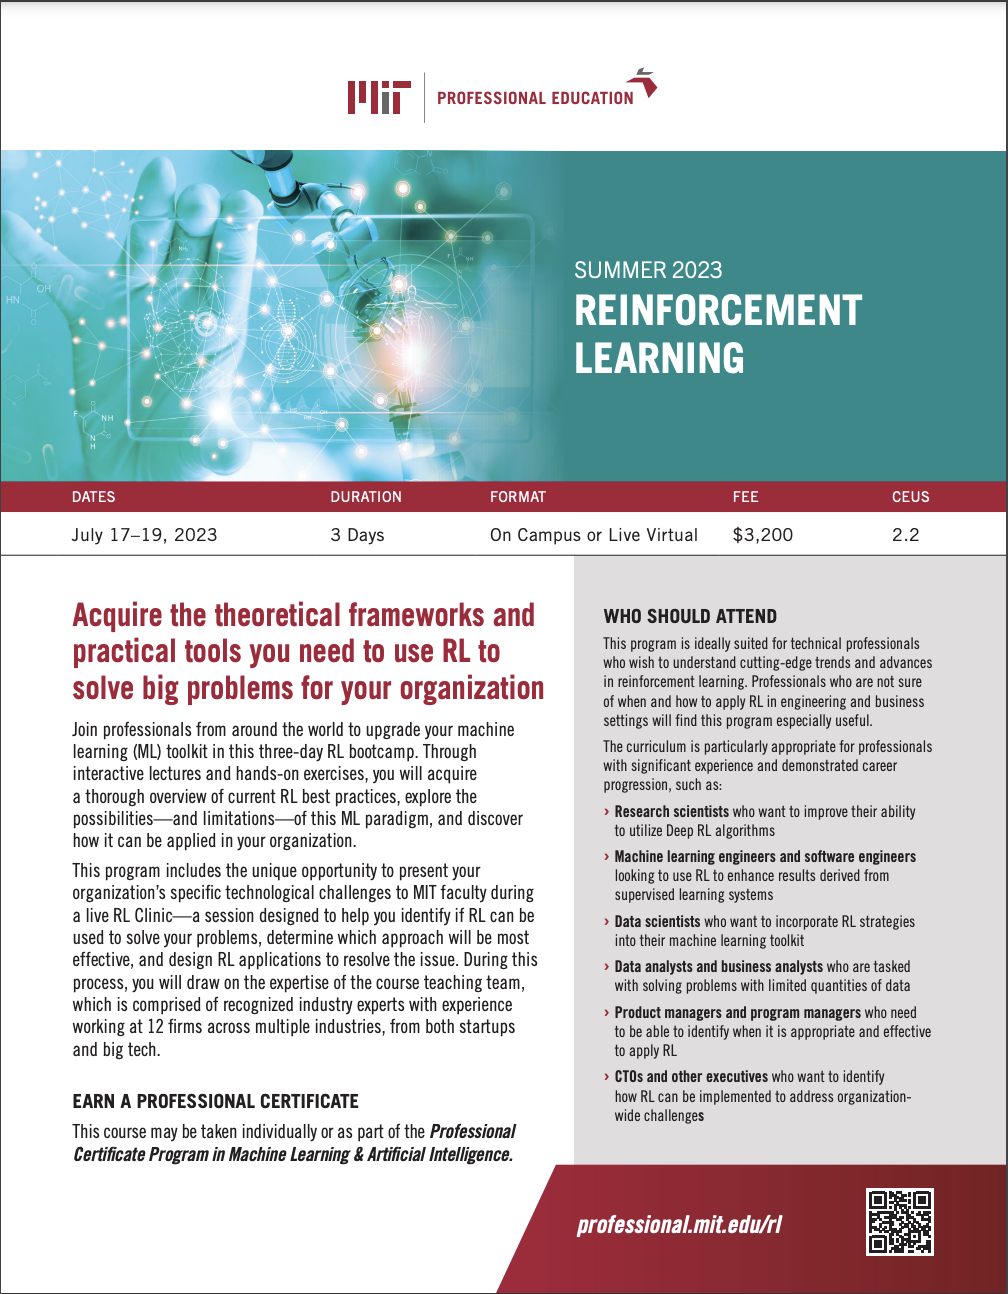 Reinforcement Learning - Brochure Image